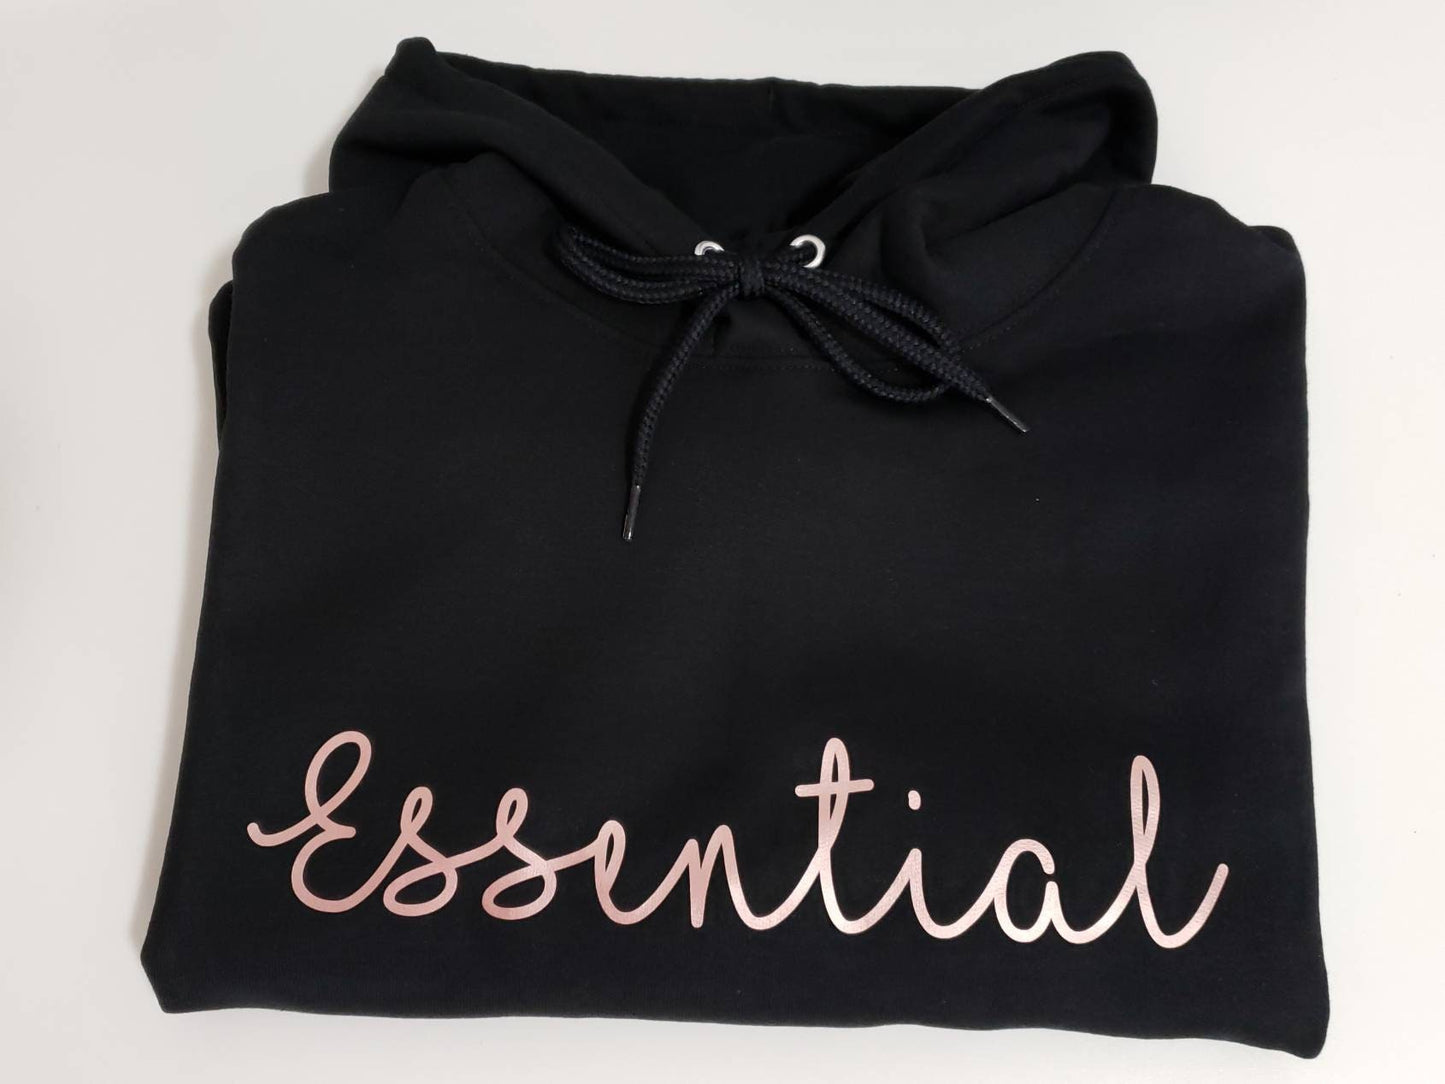 Essential Black Unisex Super Comfy Hooded Sweatshirt